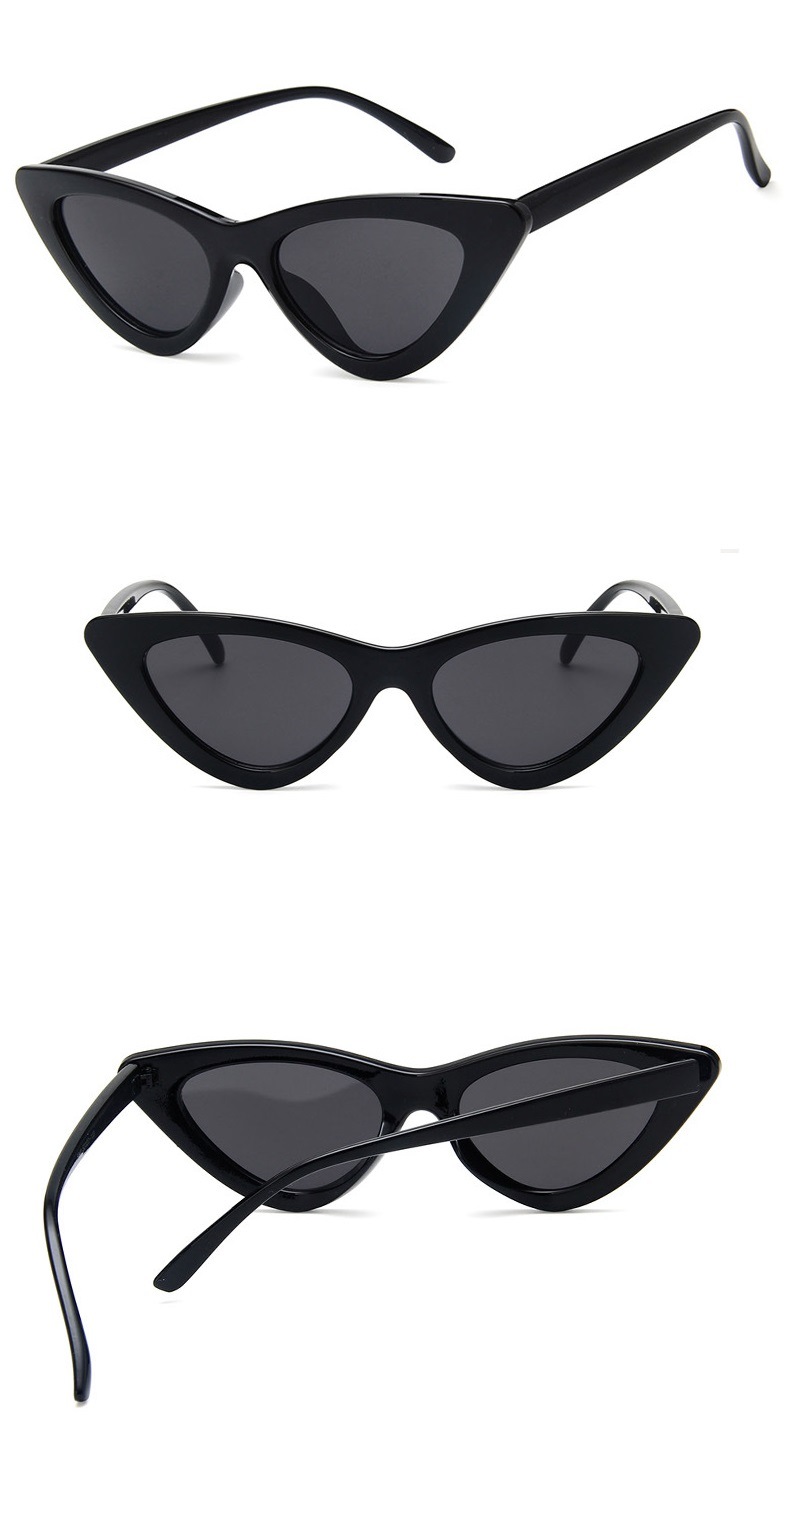 Retro Triangle Cat Eye Sunglasses Sunglasses Sunglasses Metal Hinge